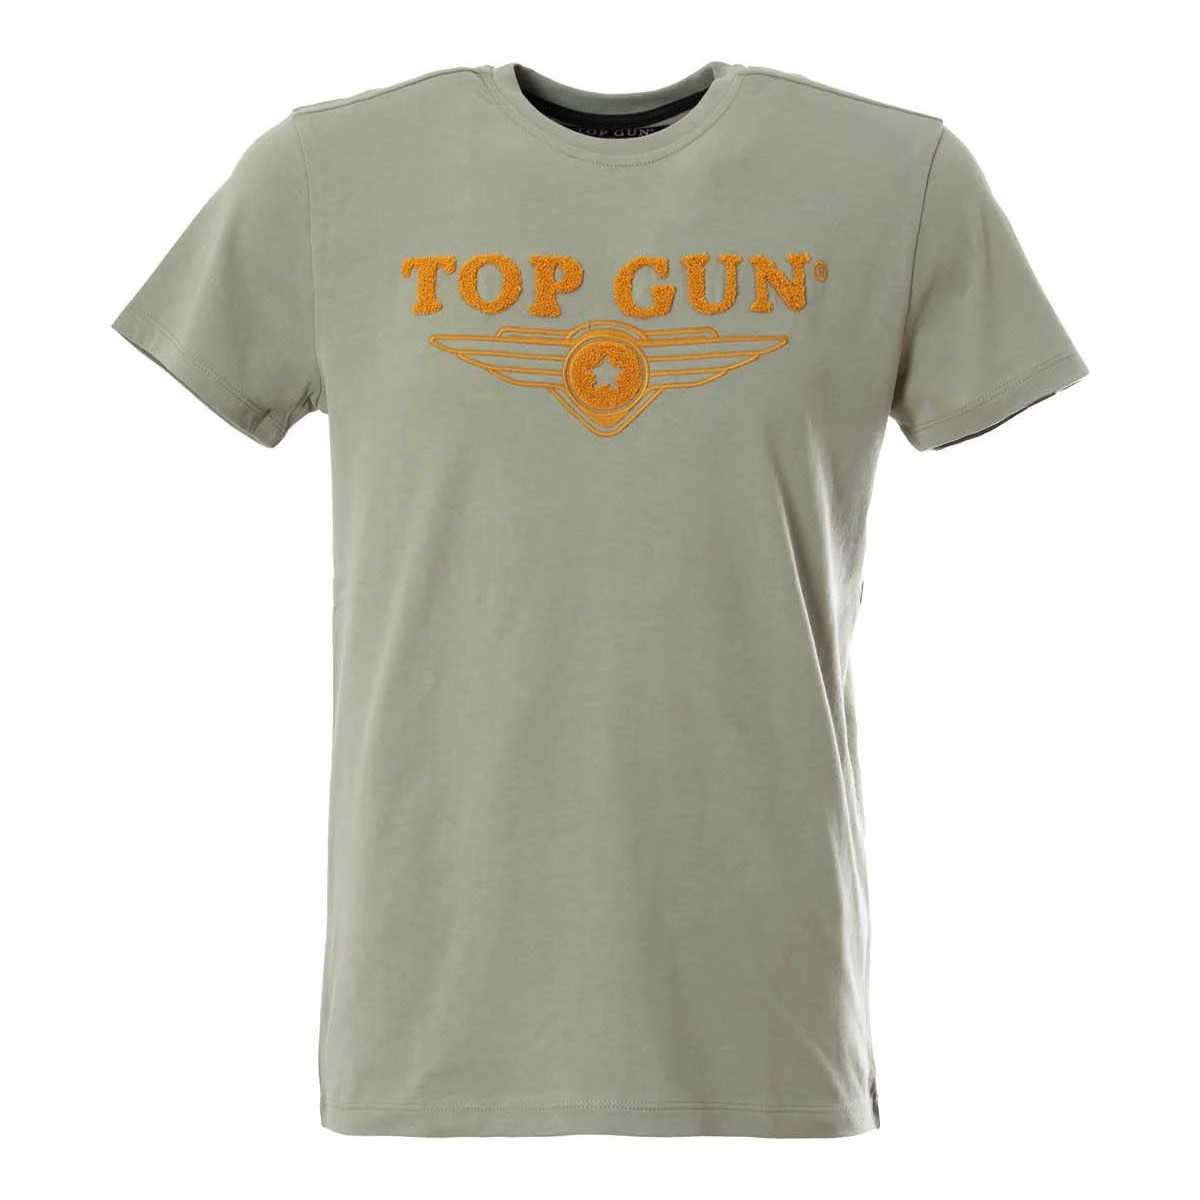 Vêtements Homme Débardeurs / T-shirts sans manche Top Gun TEE SHIRT TG-TS03 ARMY KHAKI Vert